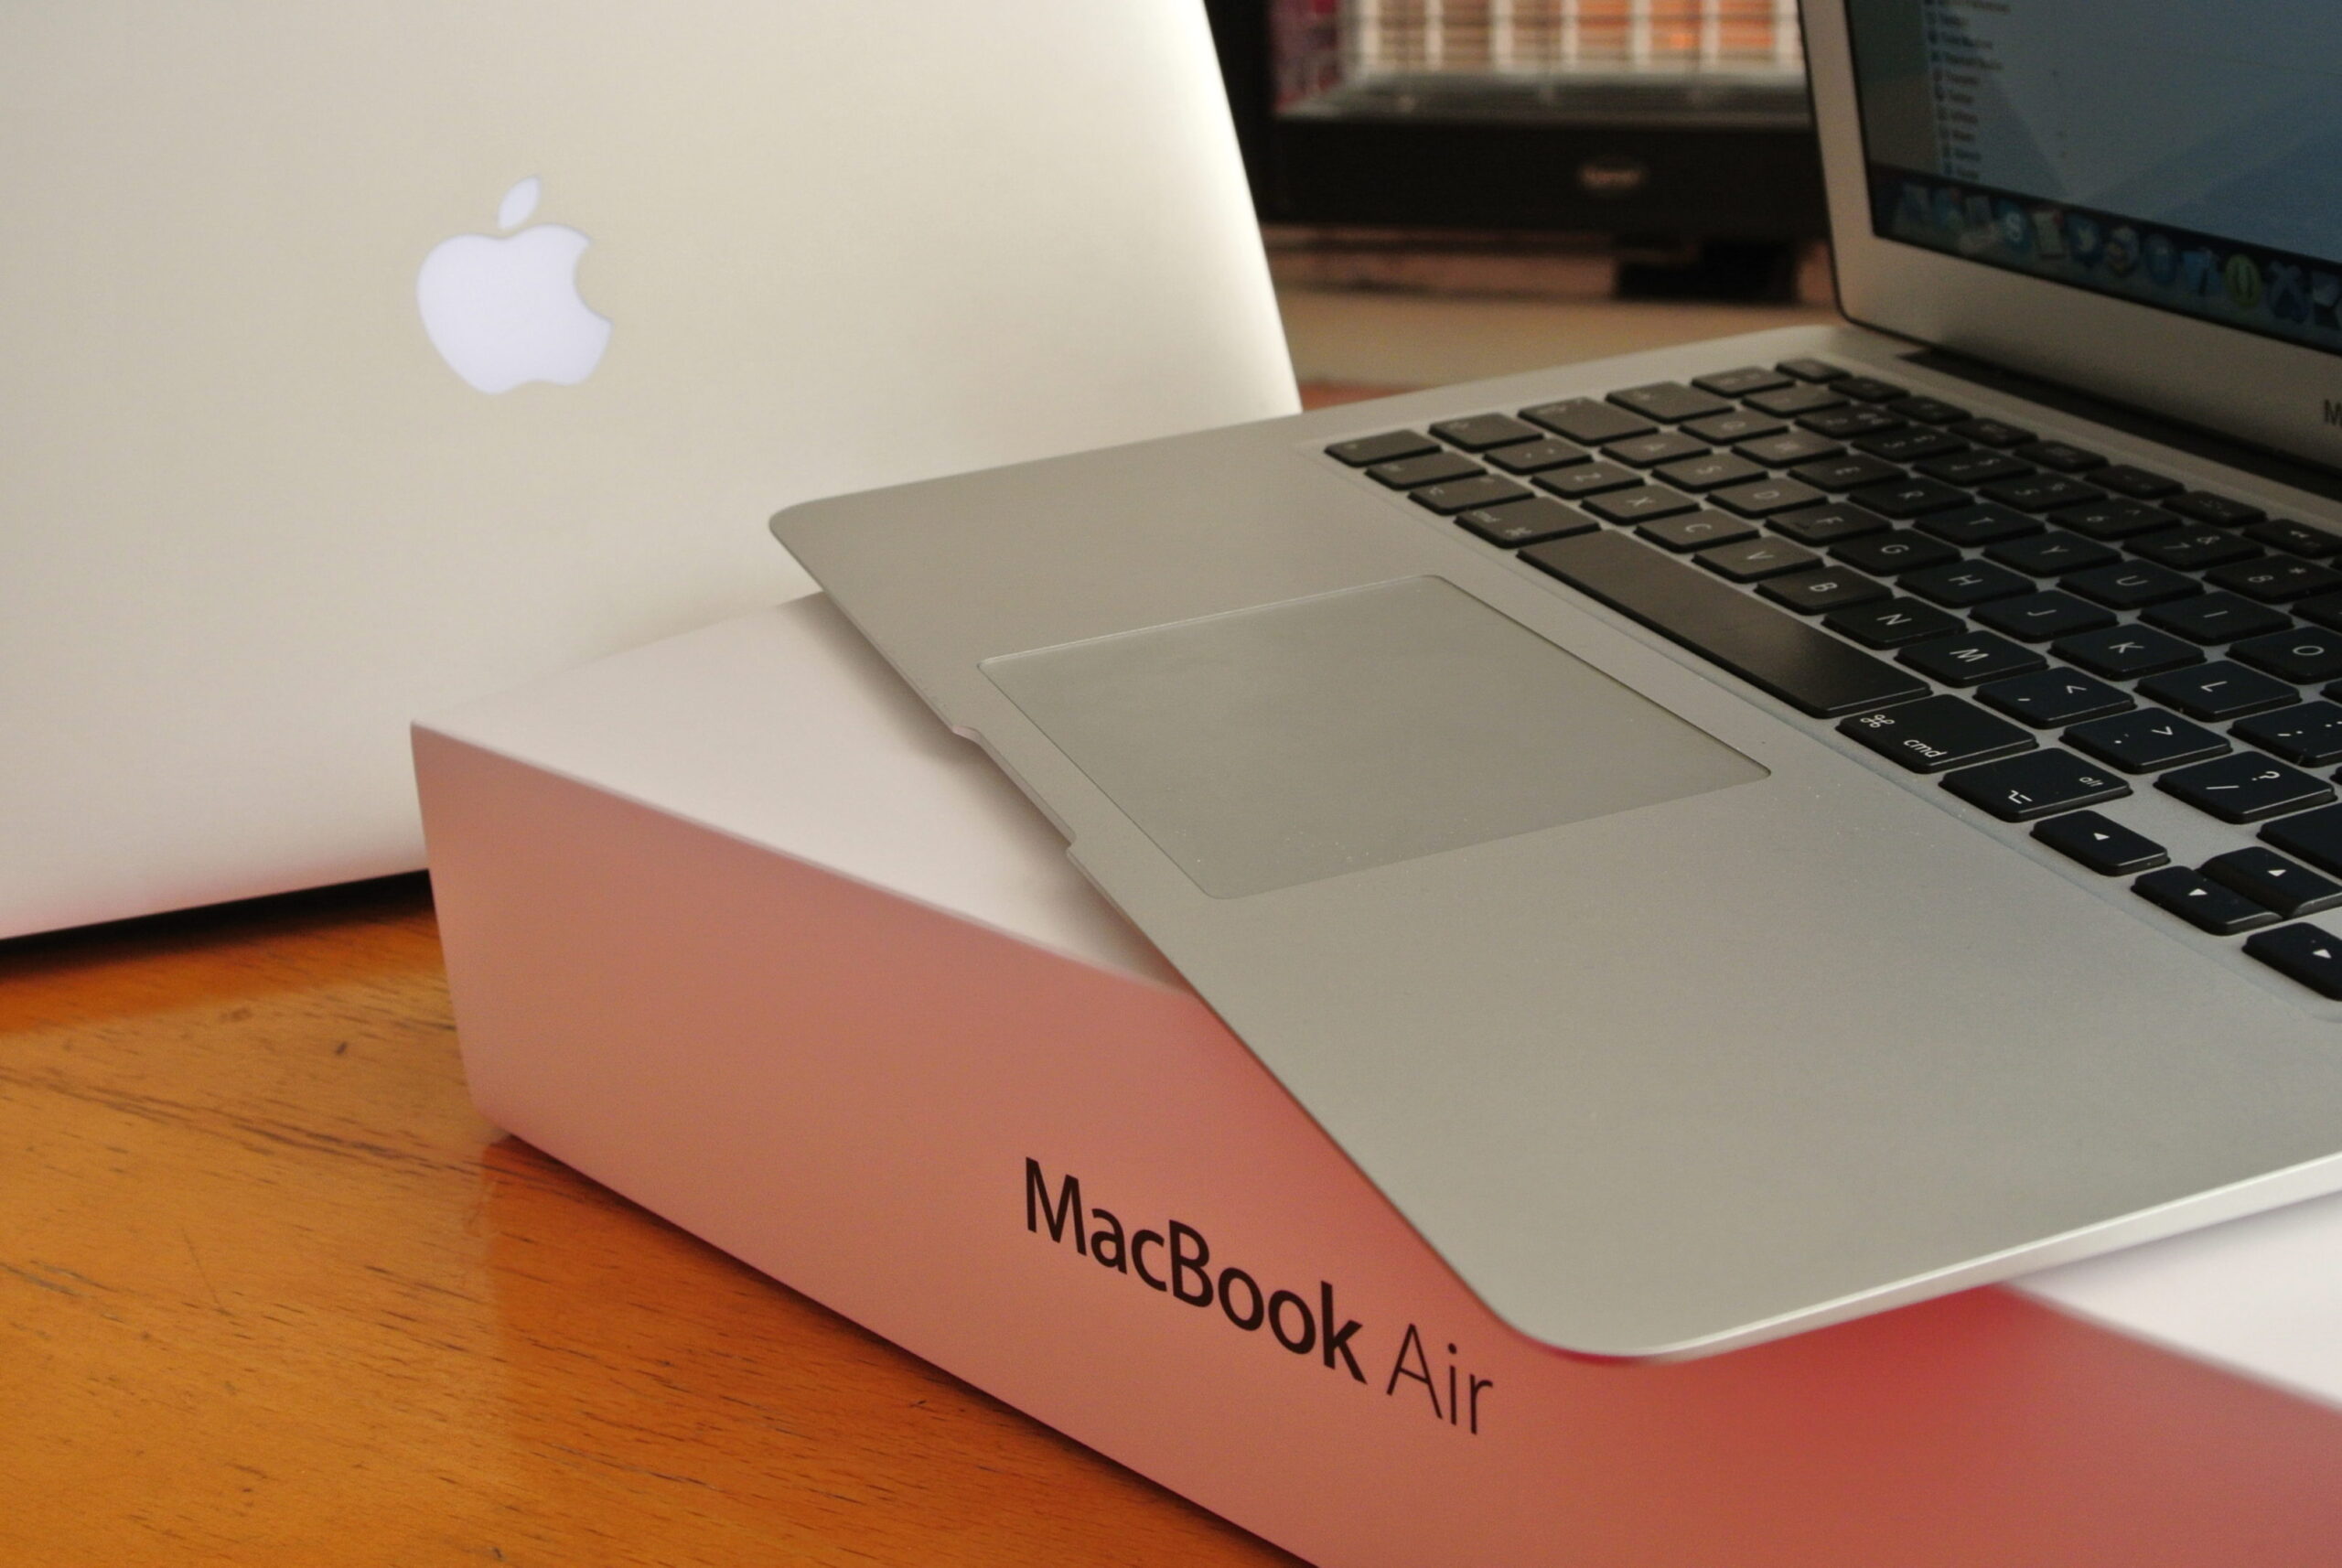 Mid 2012 MacBook Air 13" i7 2.0GHz & 8GB of RAM in front of Helen's MacBook Air